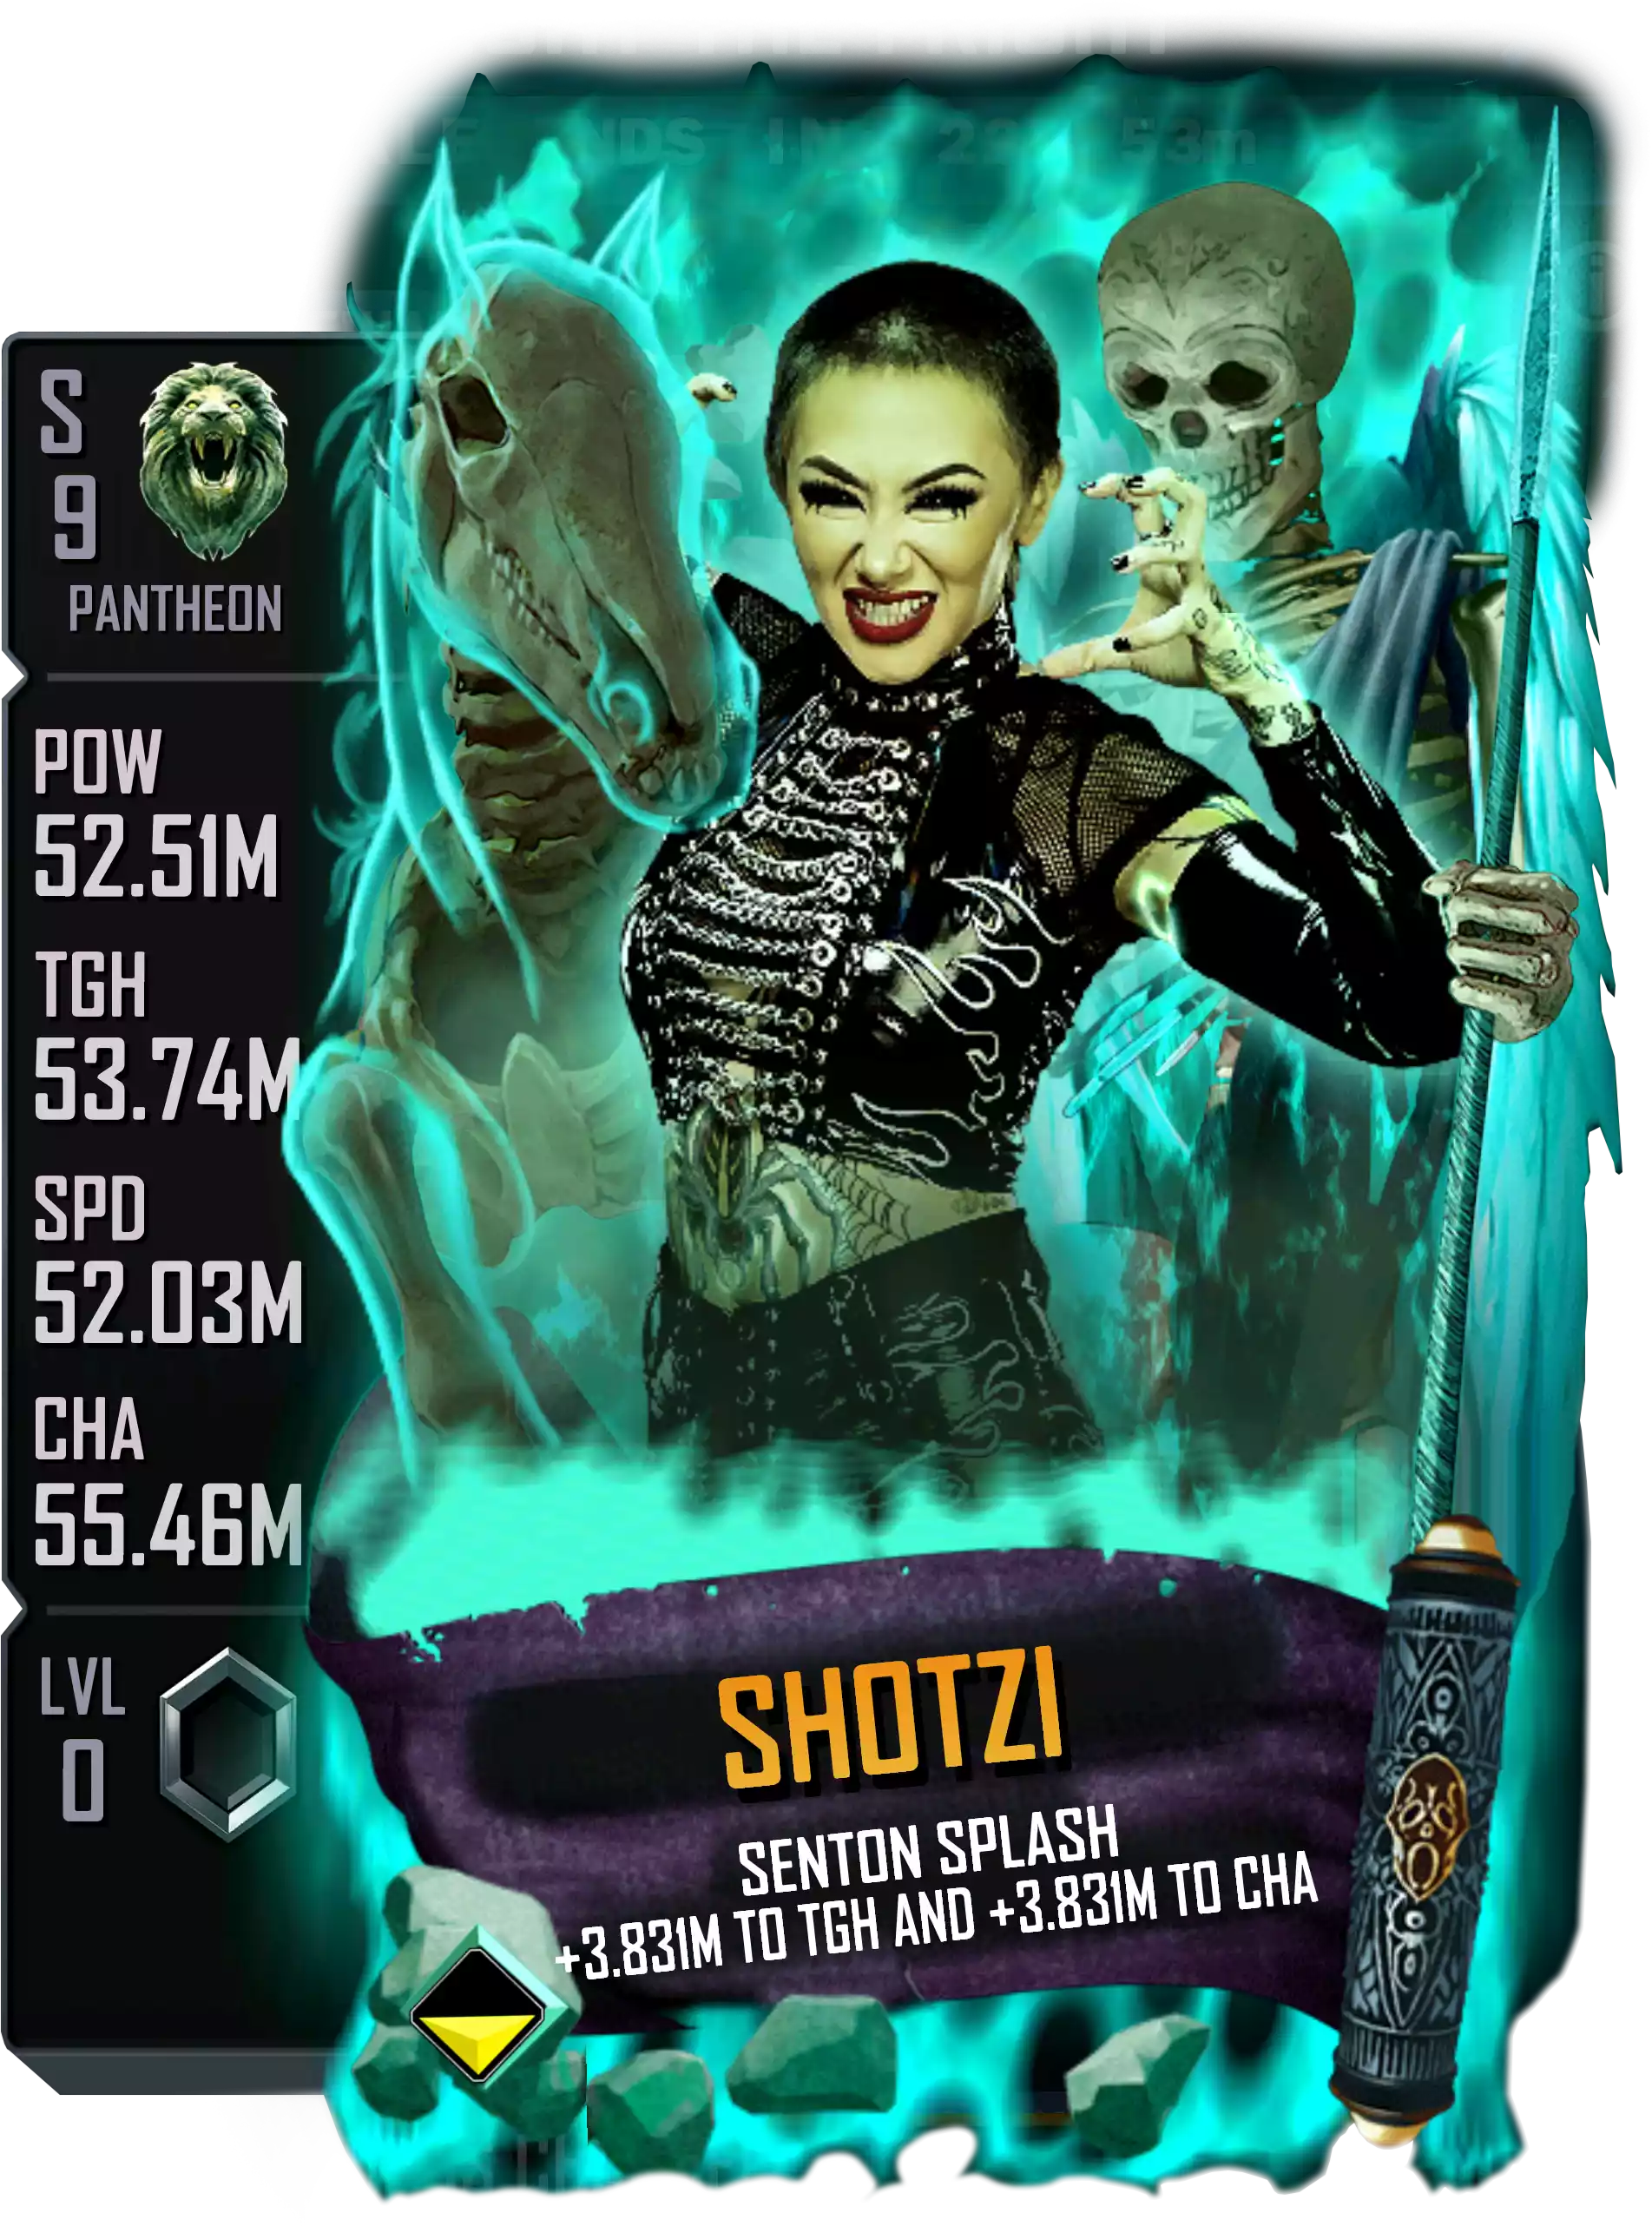 Pantheon - Shotzi - Special Seasonal Halloween Card from WWE Supercard